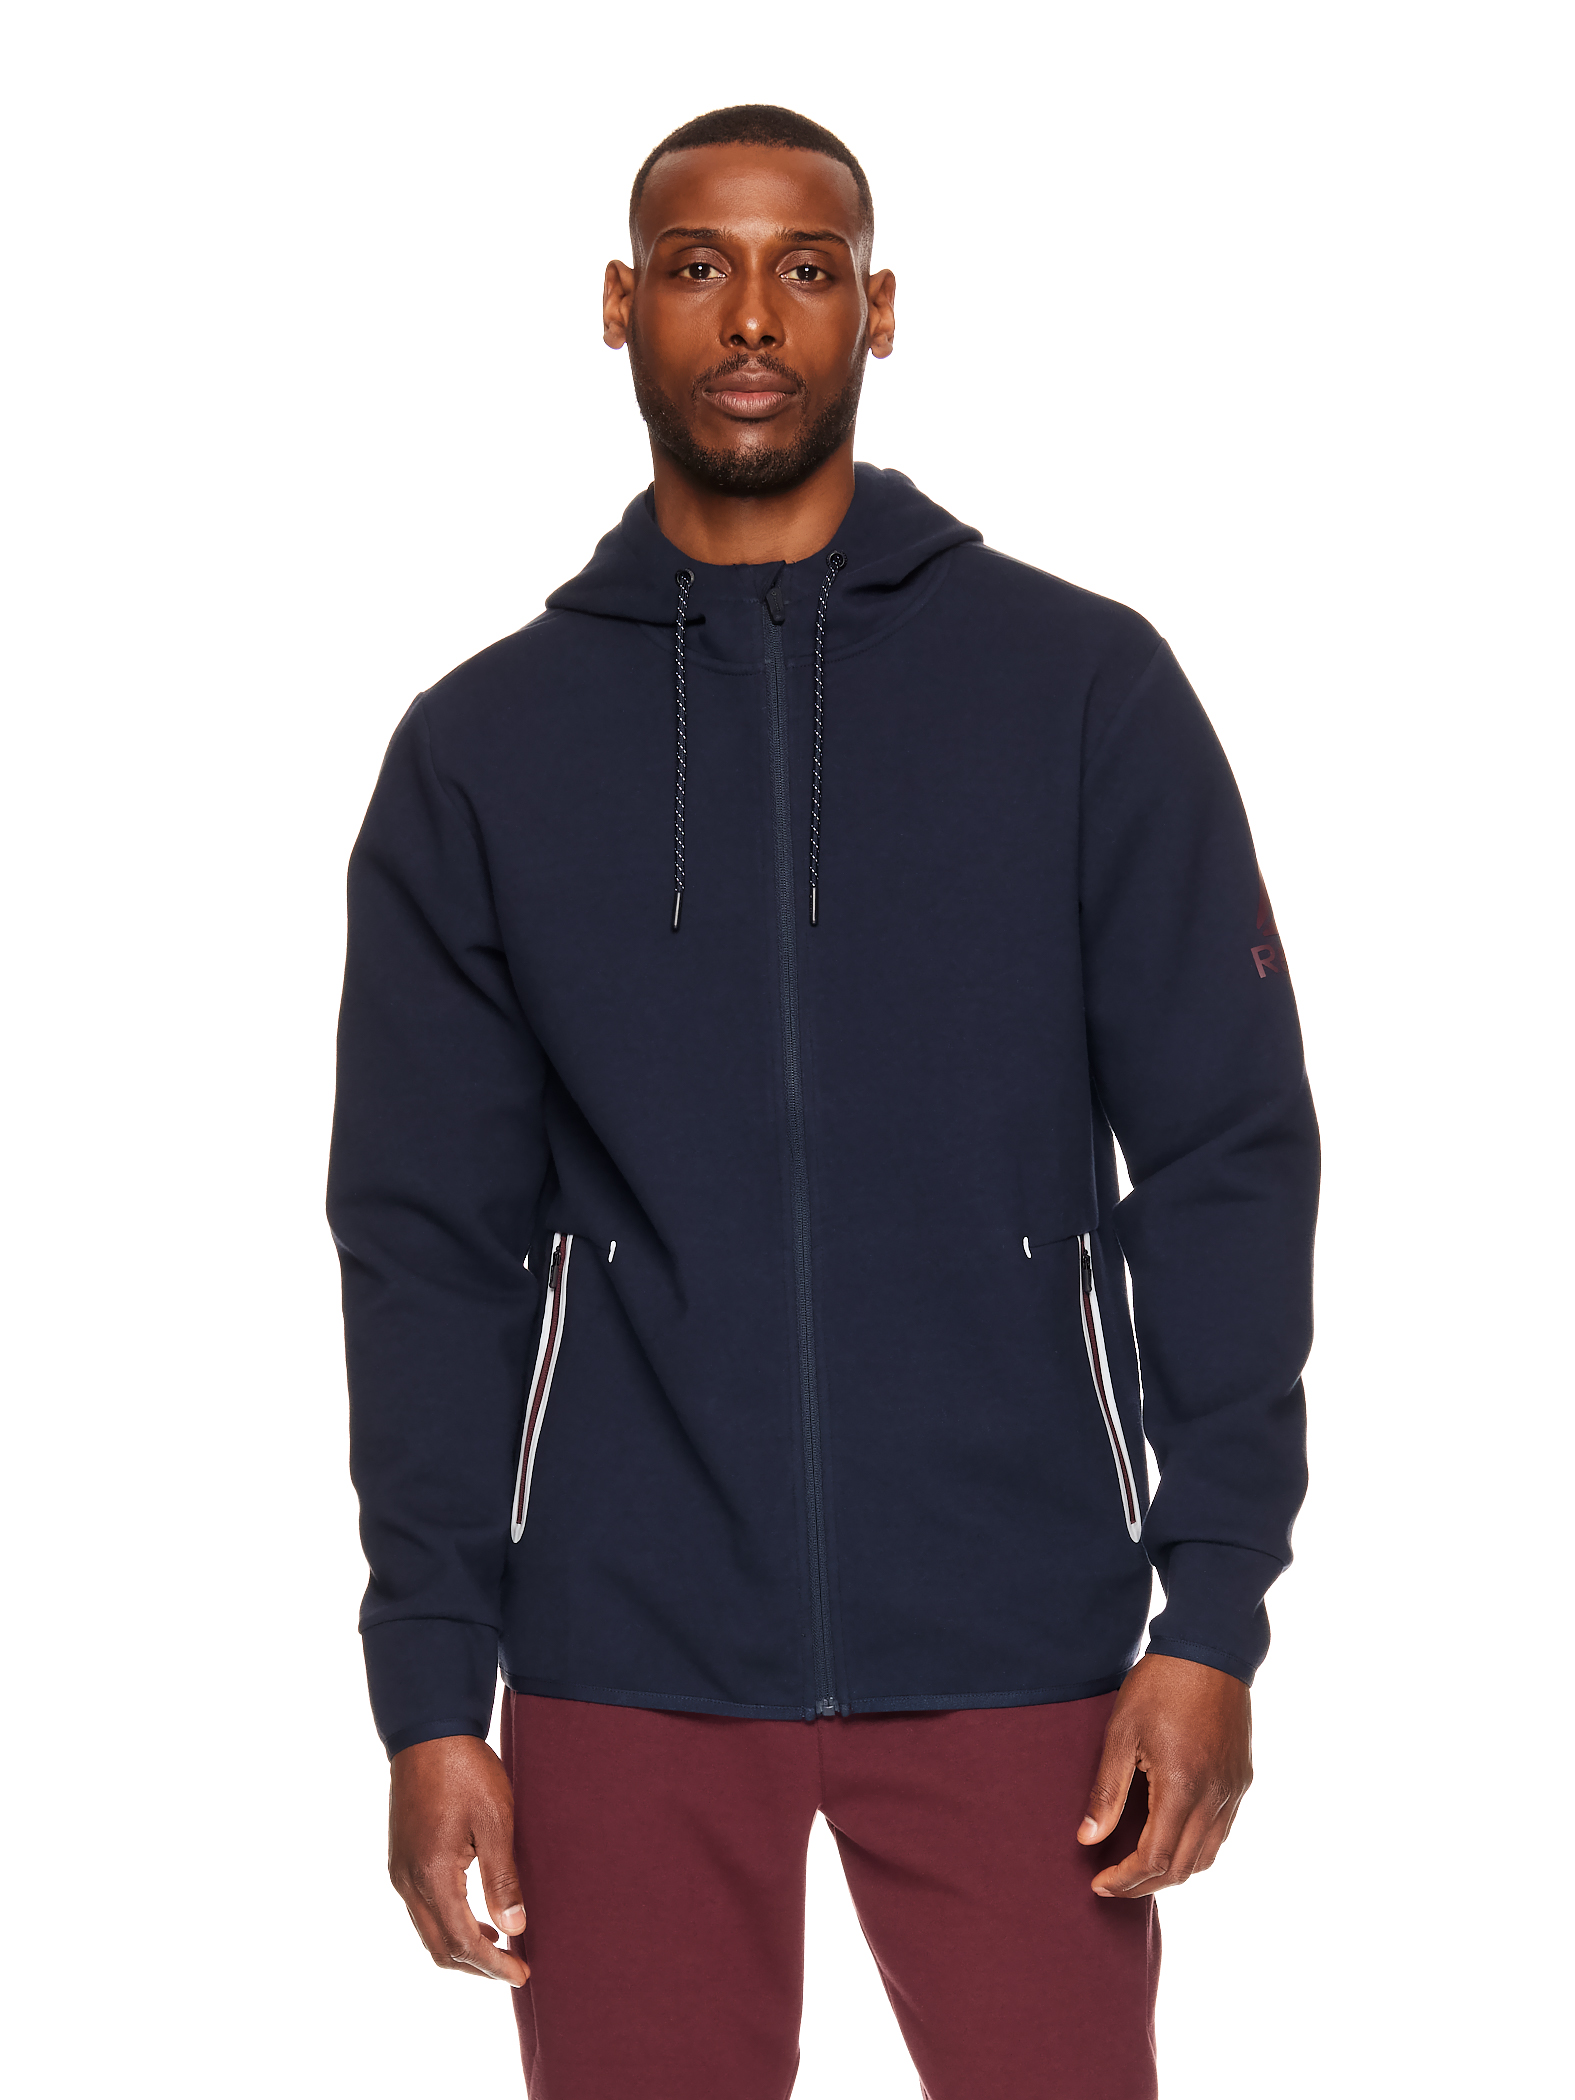 Reebok Men's Element Zip Jacket, up to Size 3XL - Walmart.com